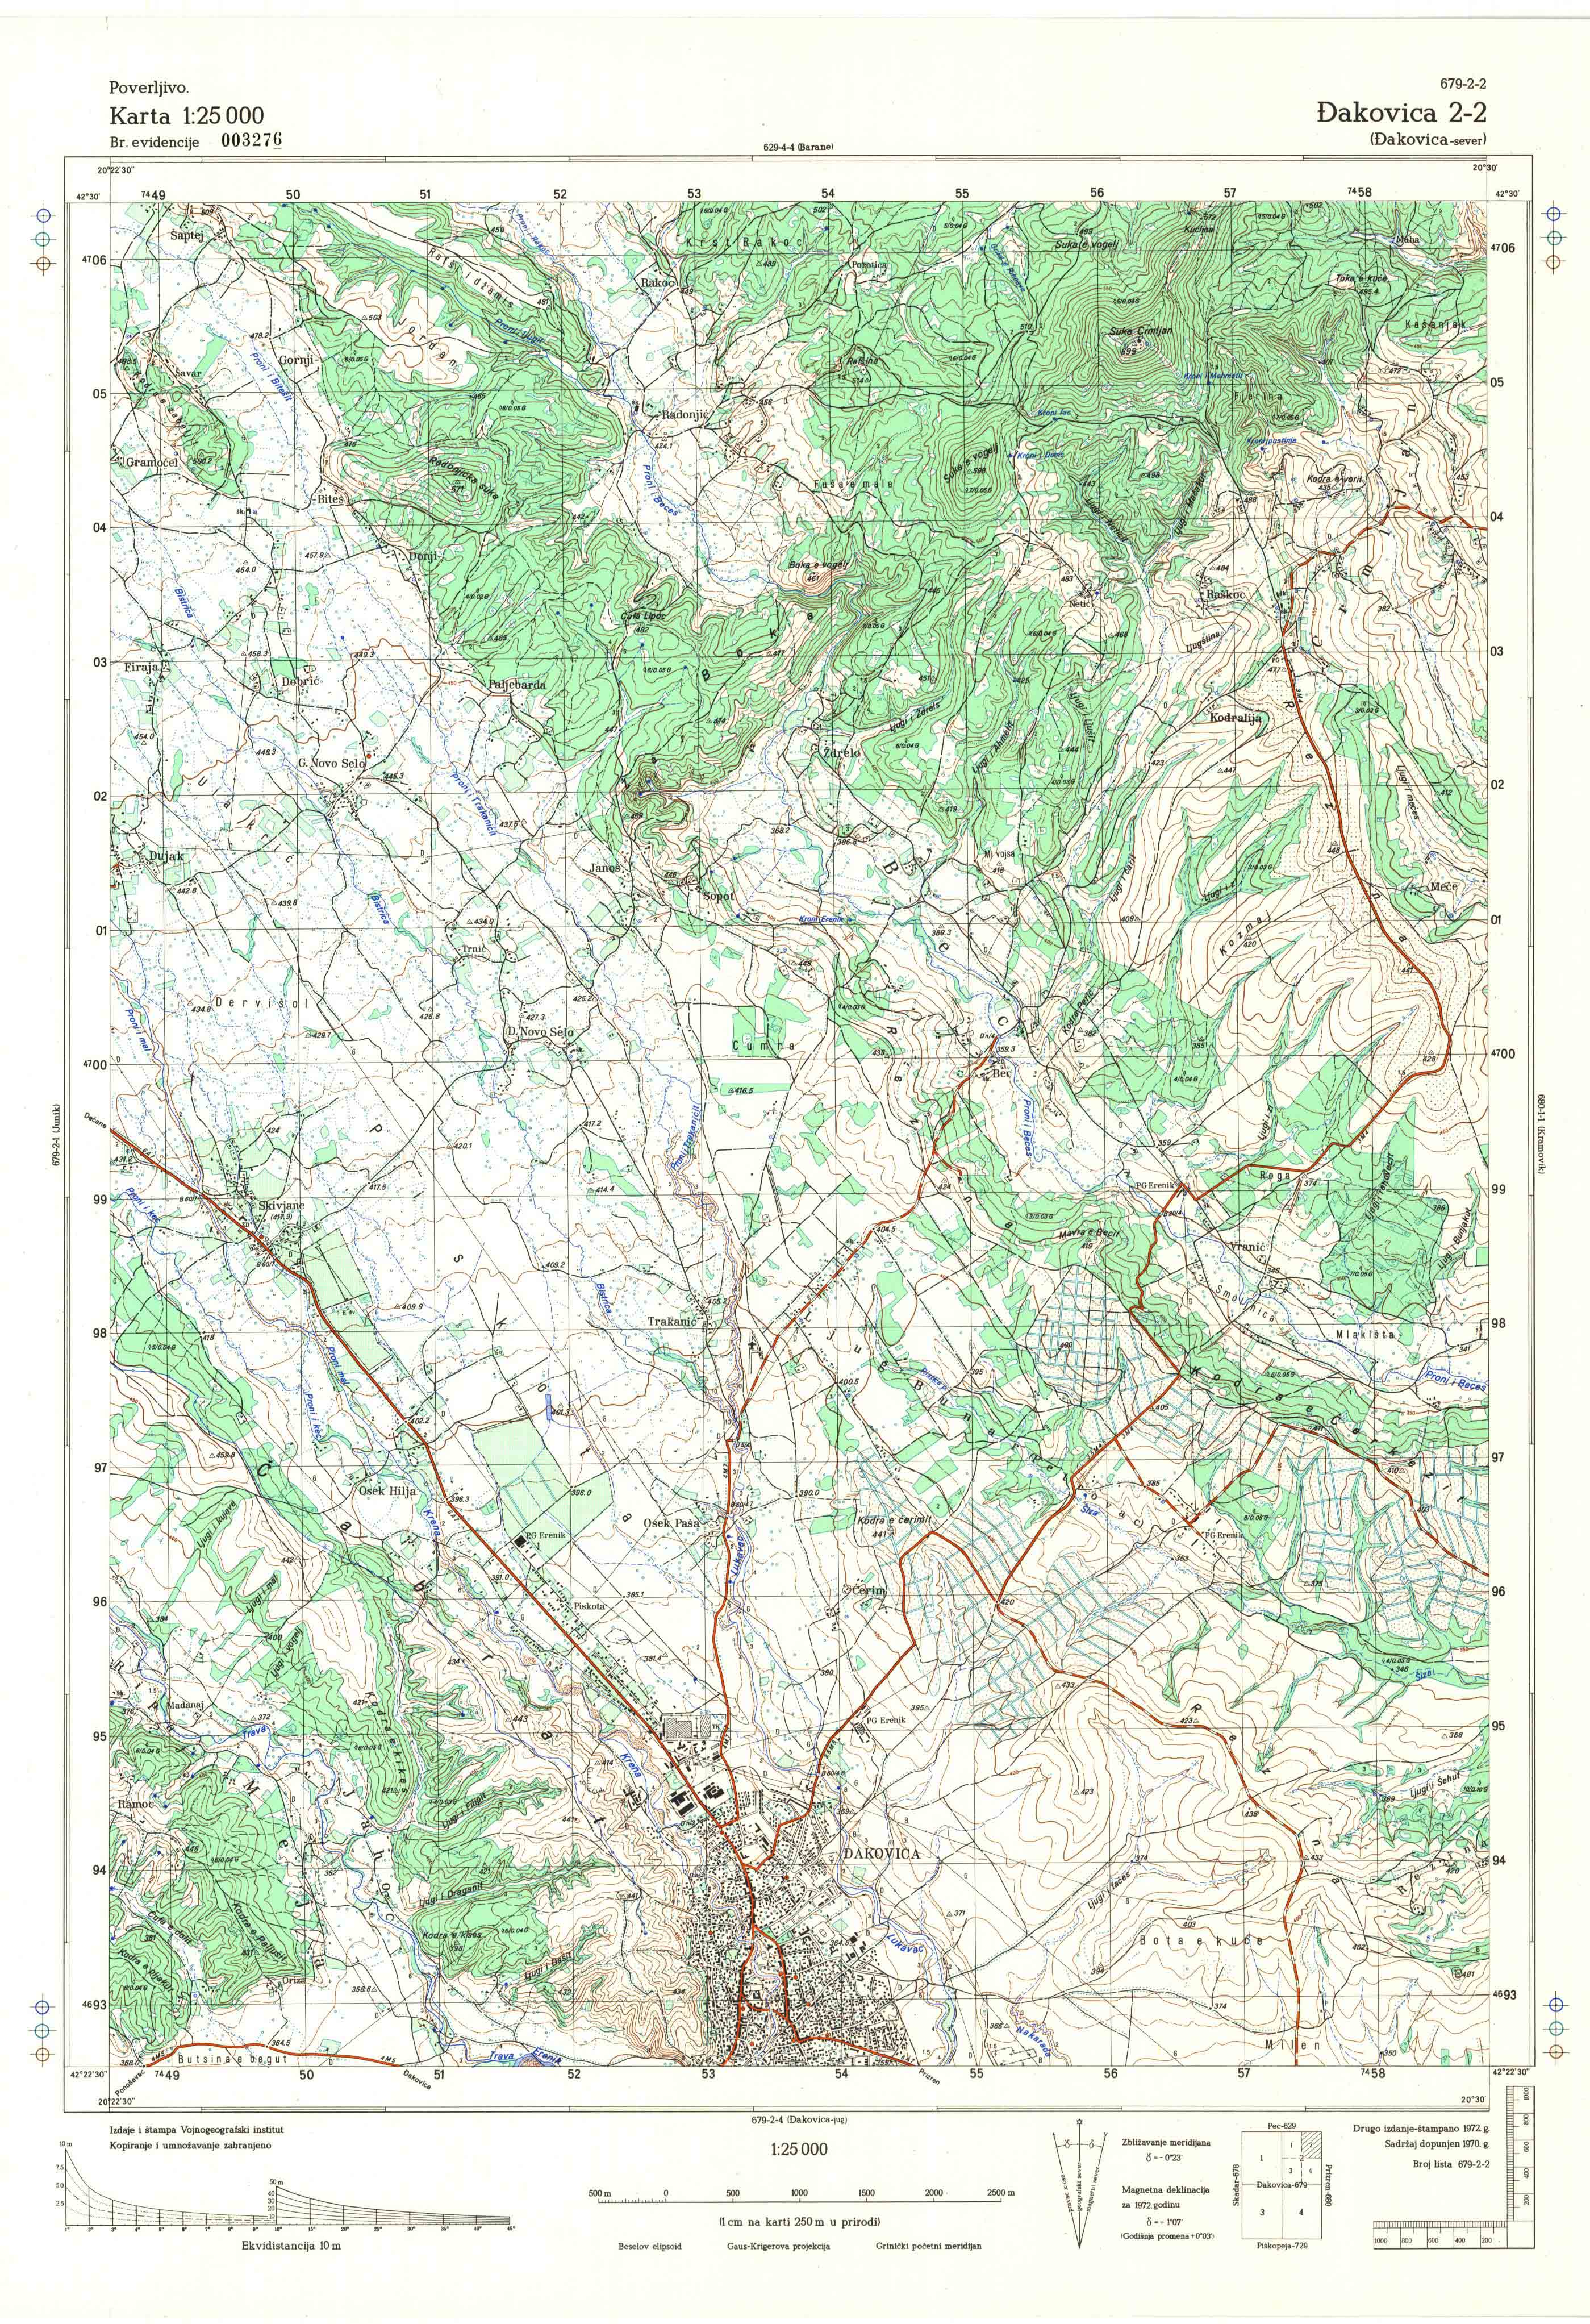  topografske karte kosove 25000 JNA  Đakovica